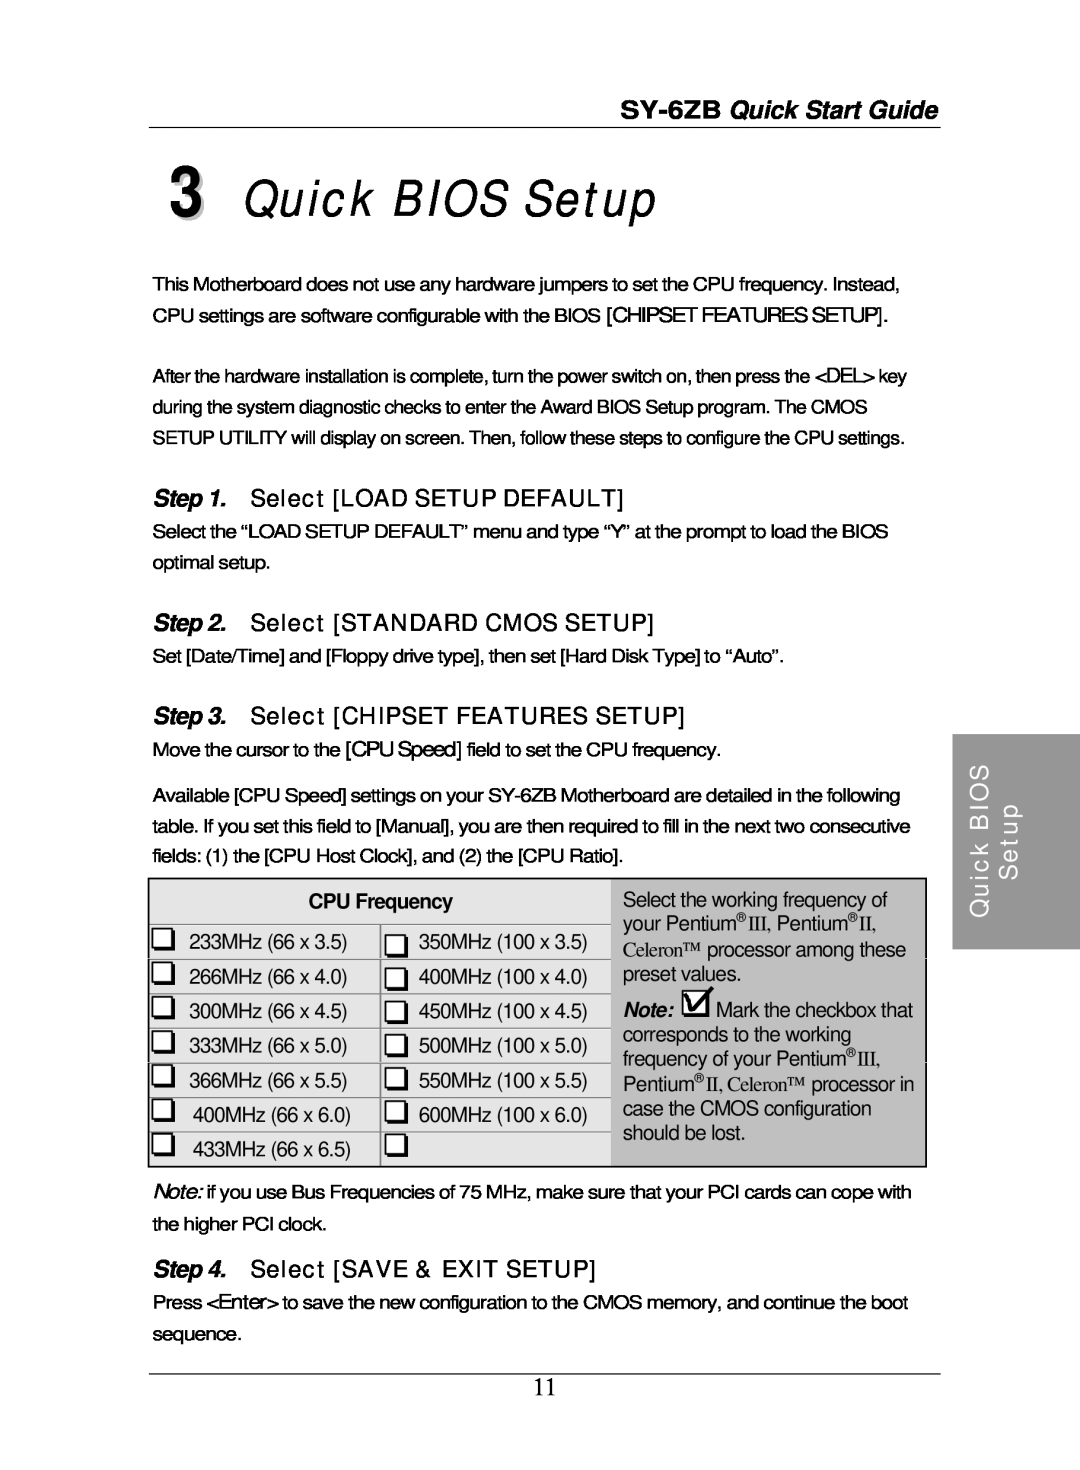 SOYO SY-6ZB Motherboard Quick BIOS Setup, Select LOAD SETUP DEFAULT, Select STANDARD CMOS SETUP, Select SAVE & EXIT SETUP 